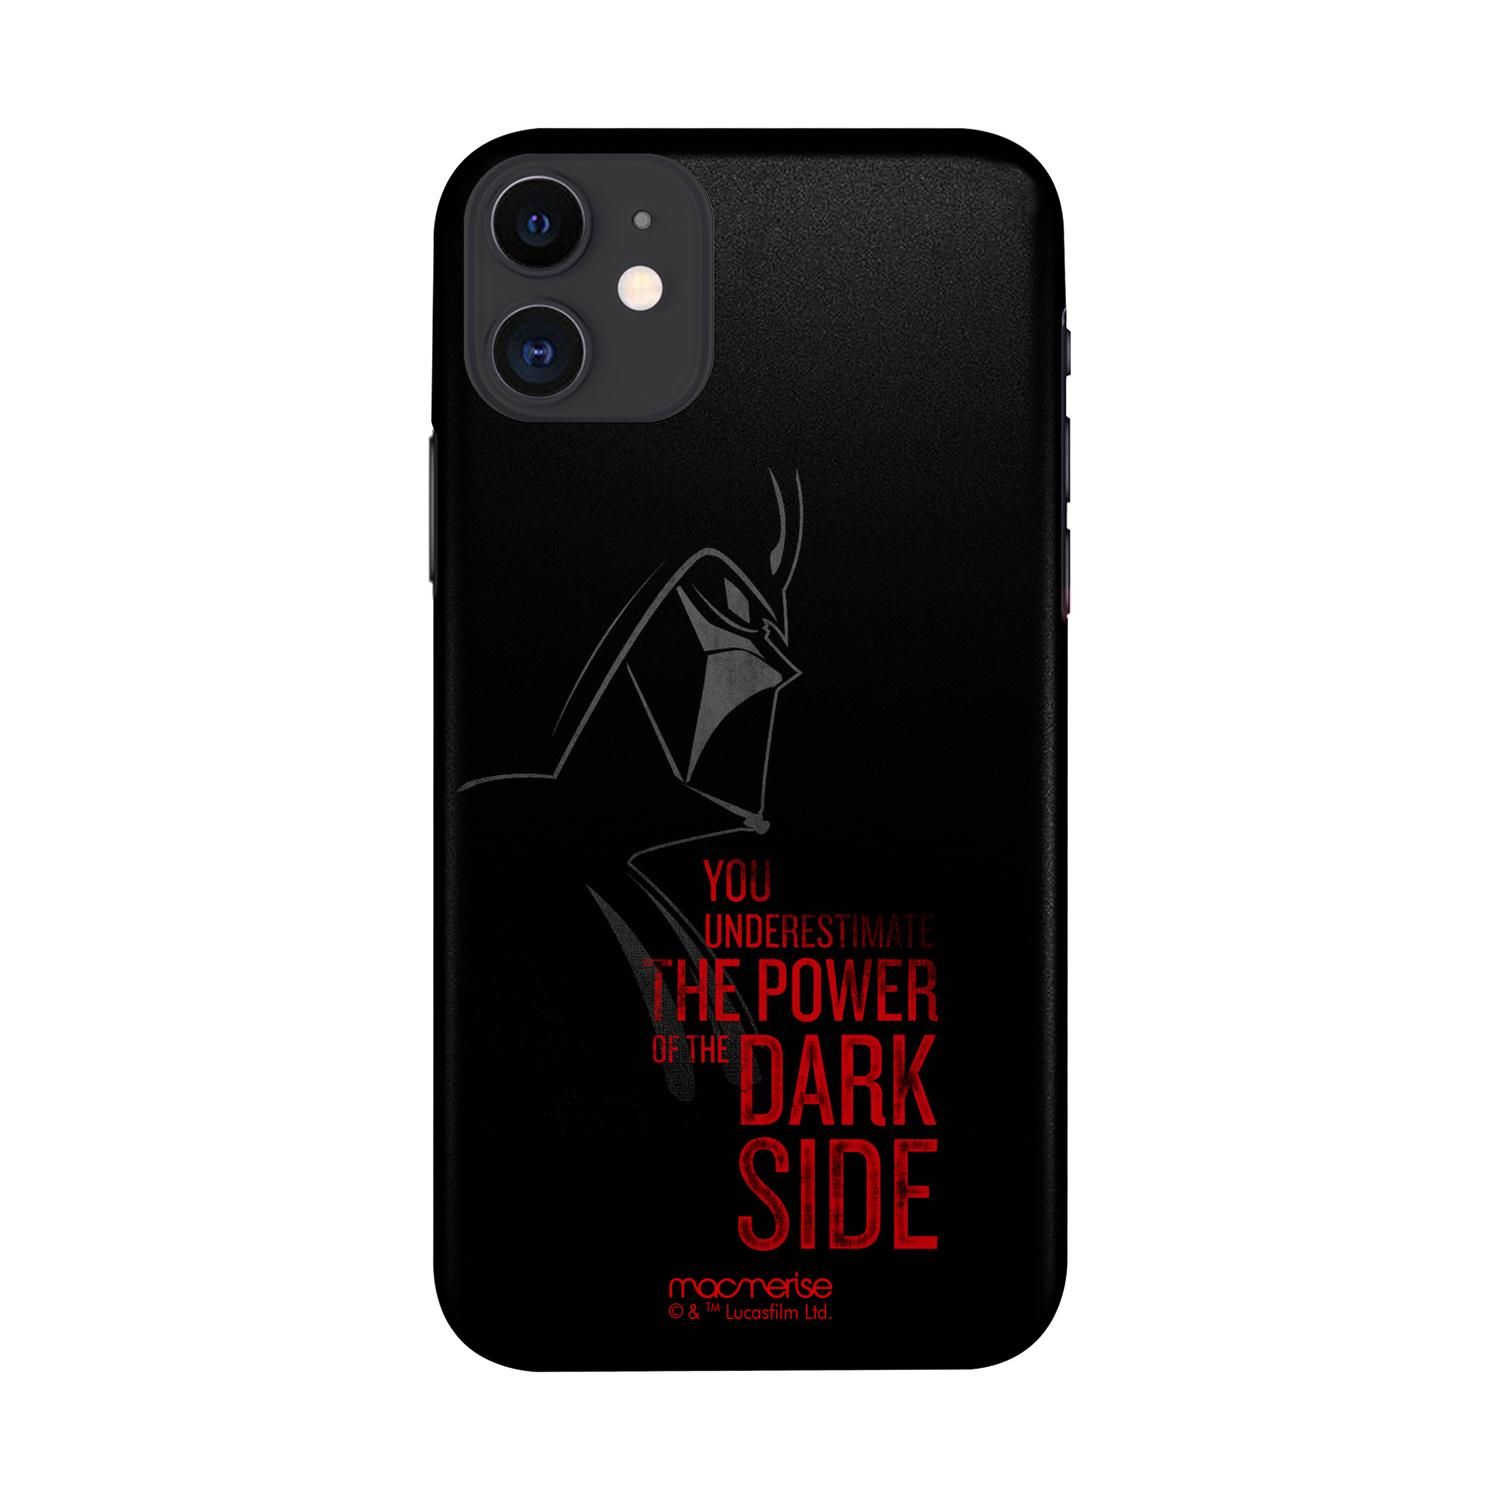 Buy The Dark Side - Sleek Phone Case for iPhone 11 Online